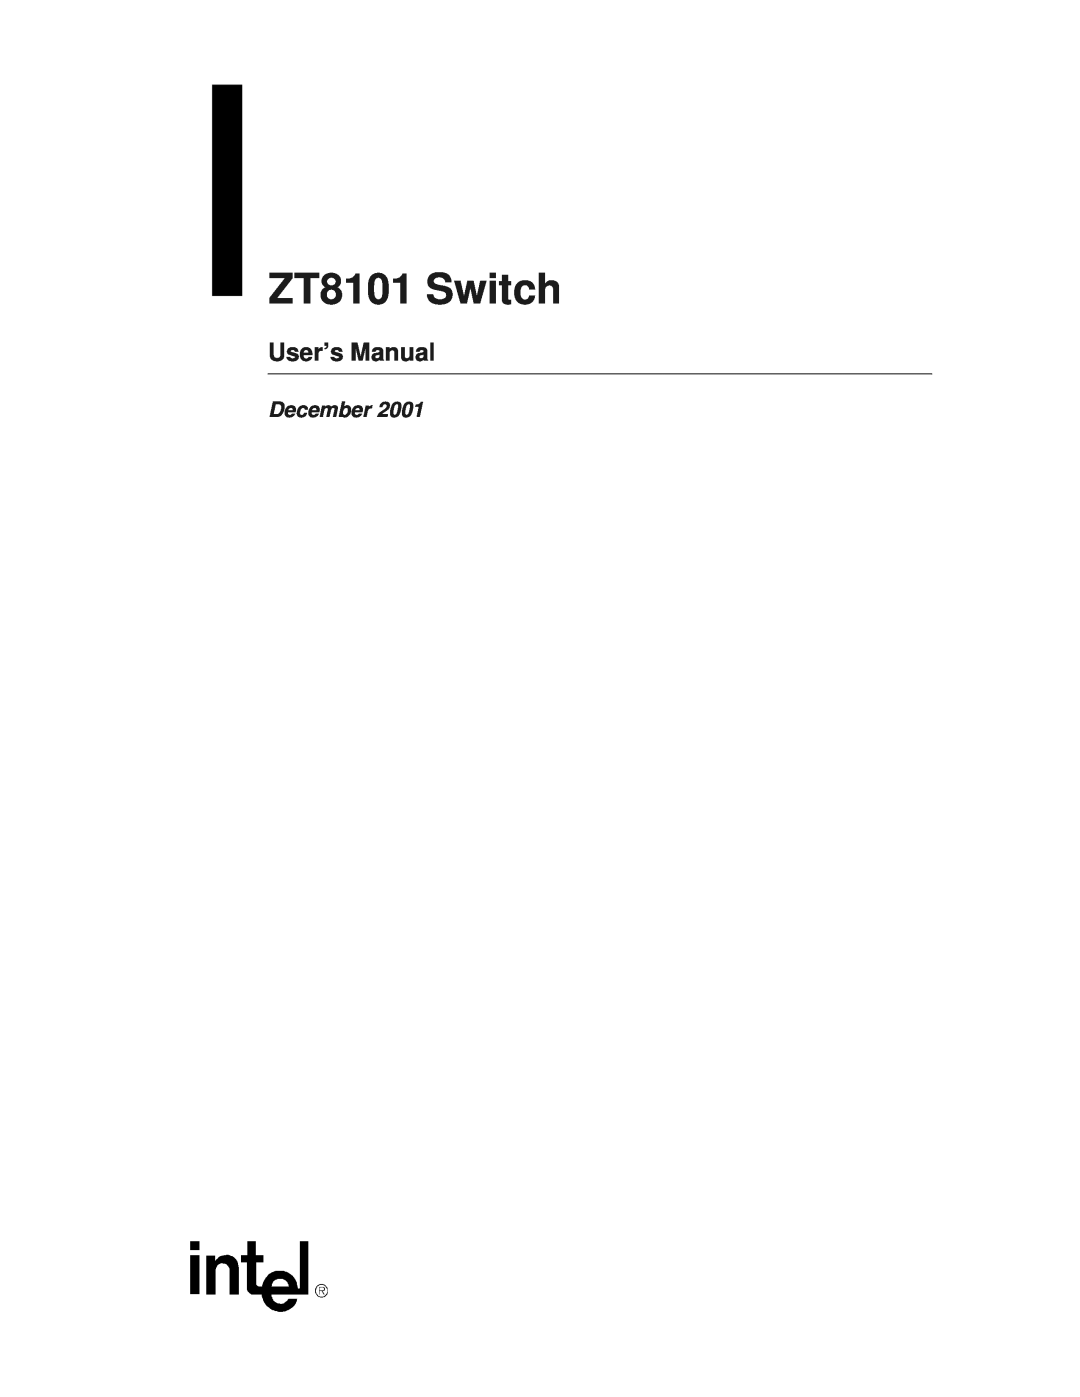 Intel user manual ZT8101 Switch, December 